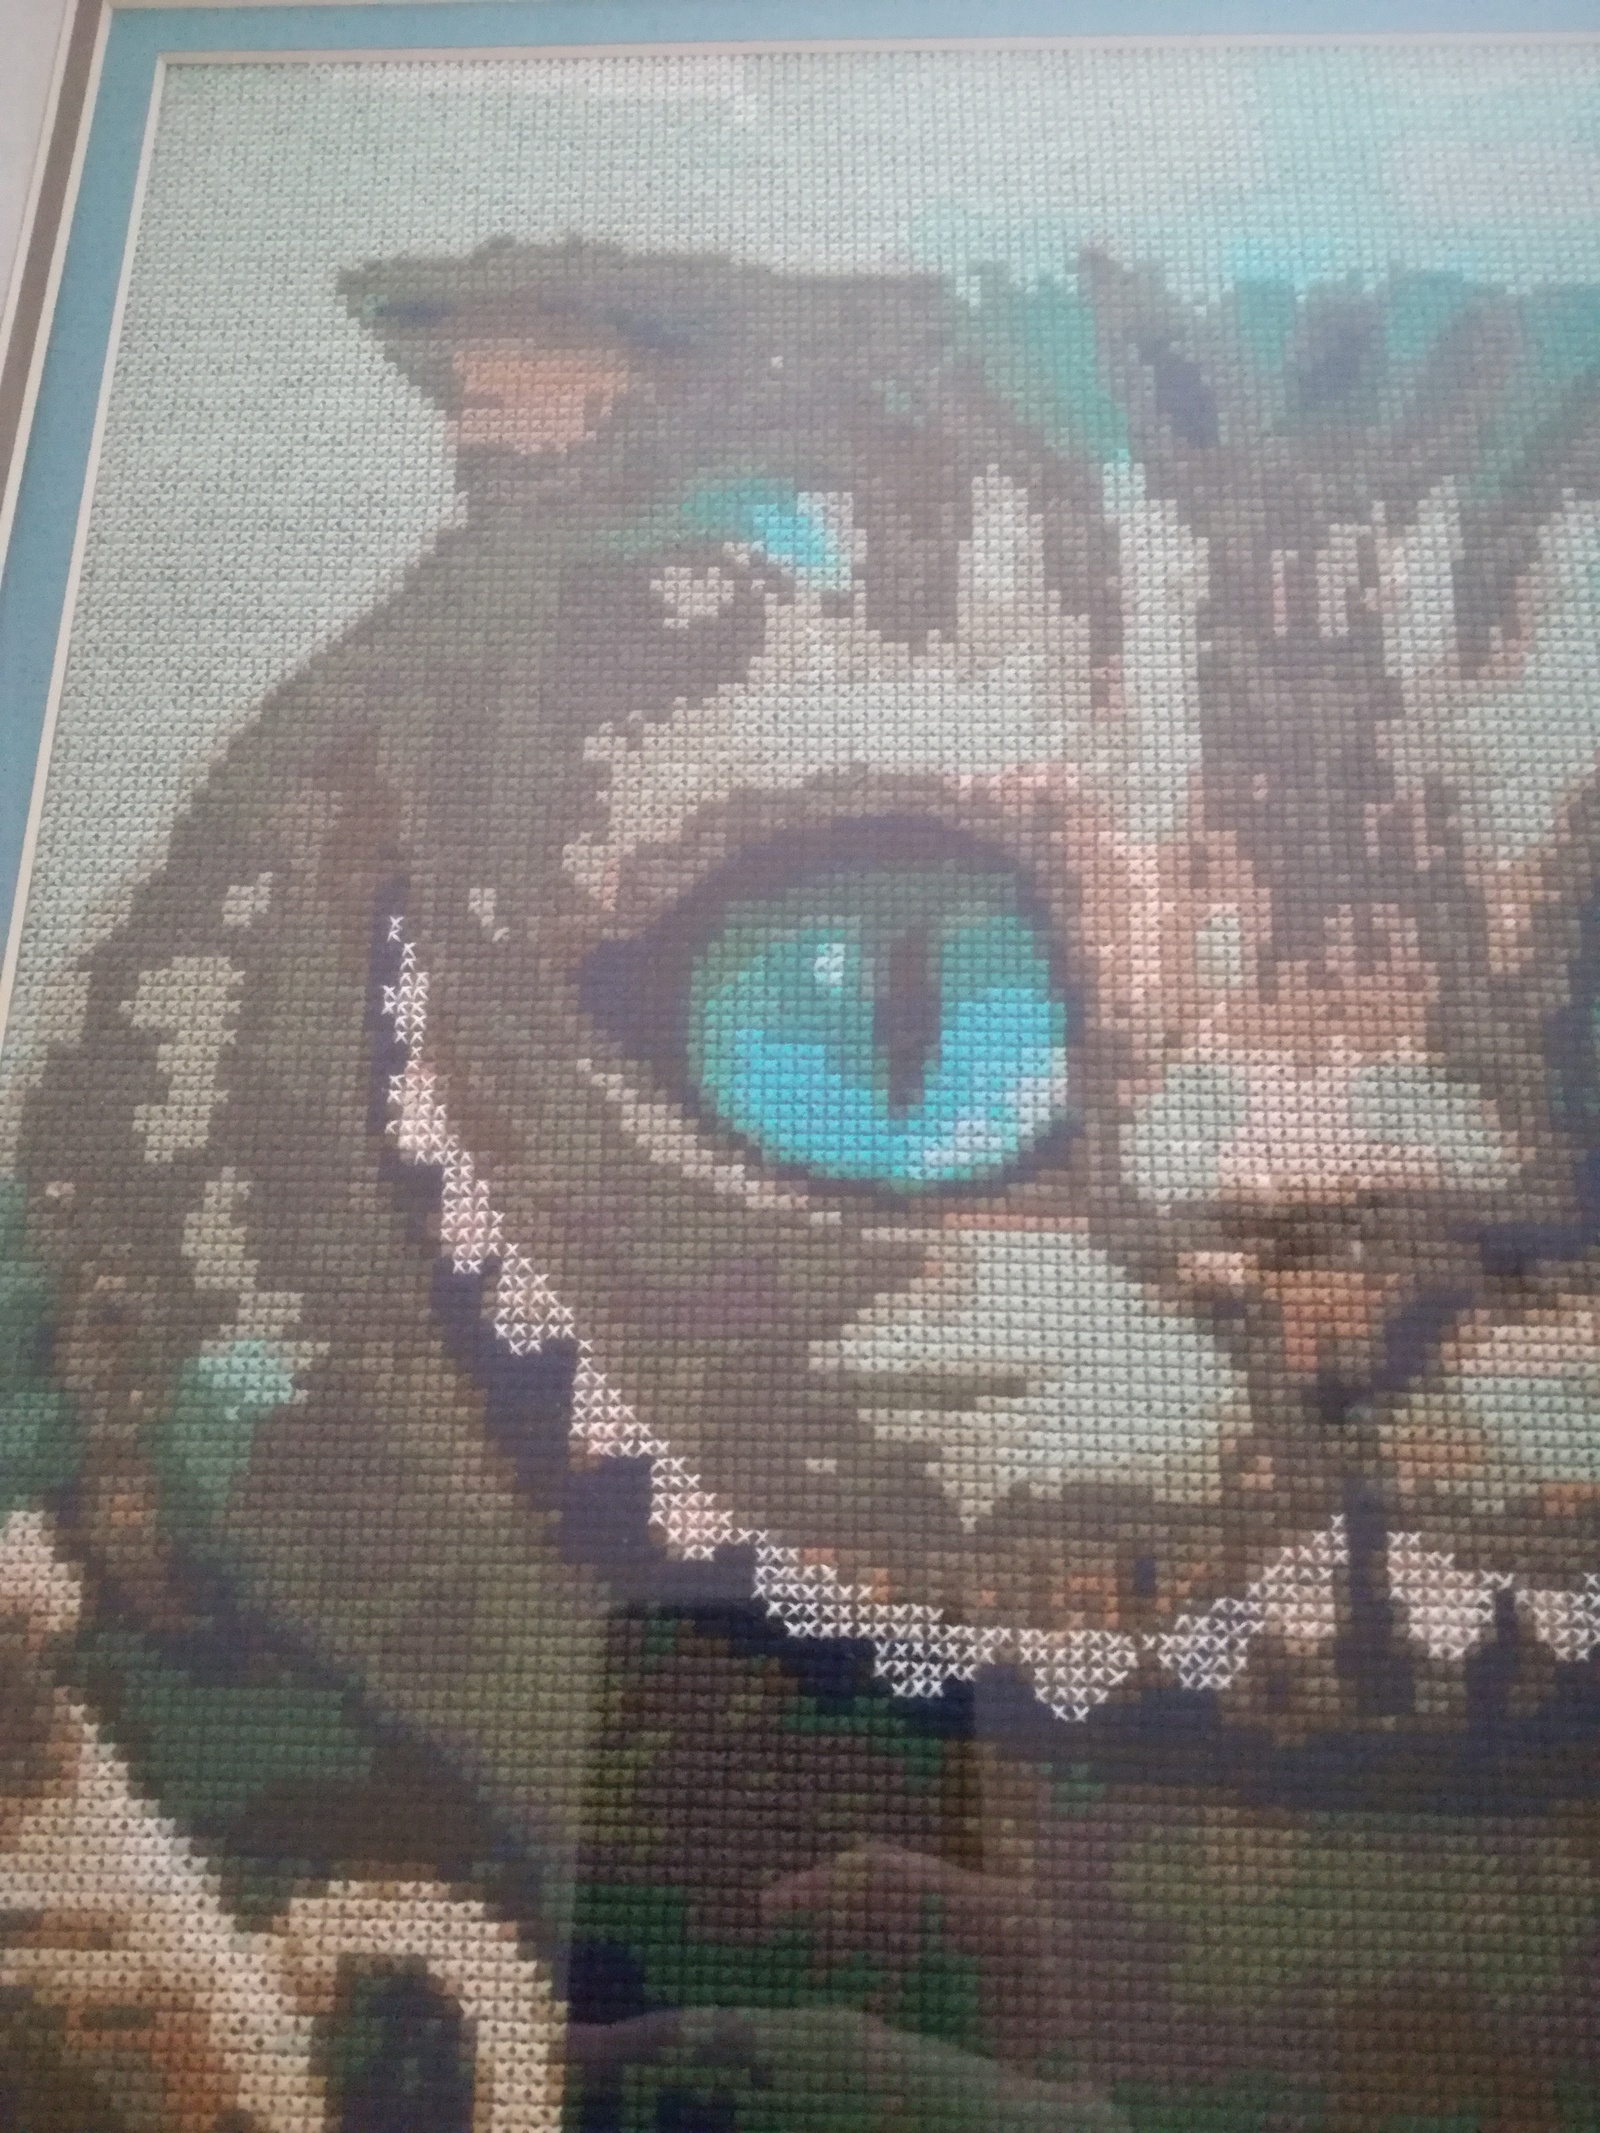 Painting. Cheshire Cat. - My, Cheshire Cat, Cheshire, Alice in Wonderland, Tim Burton, Painting, Embroidery, Needlework without process, Longpost